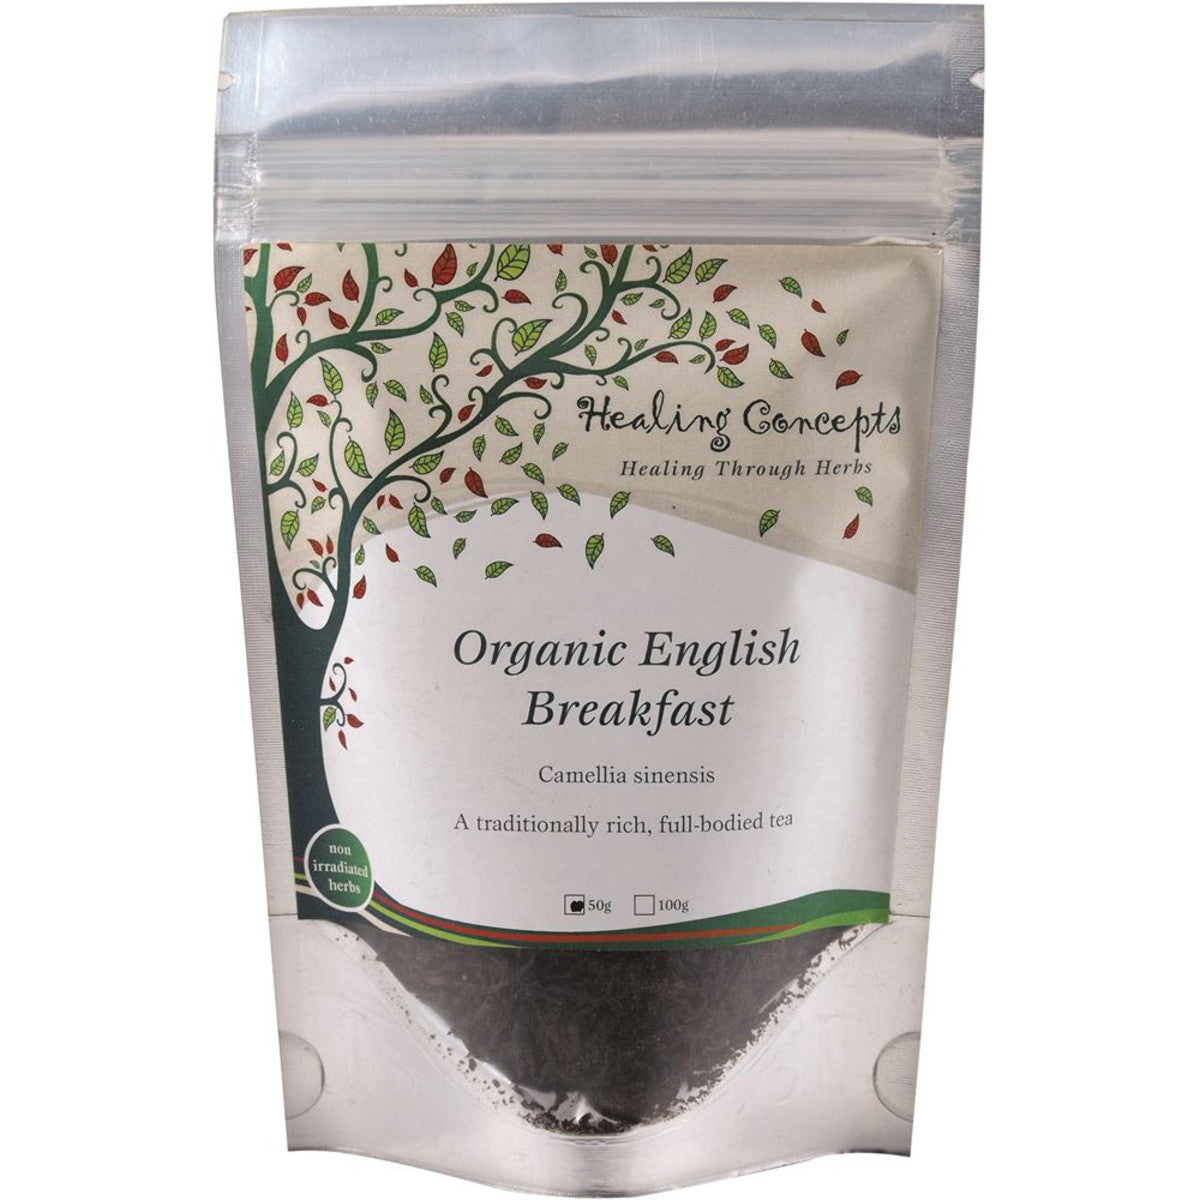 Healing Concepts - Organic English Breakfast Tea